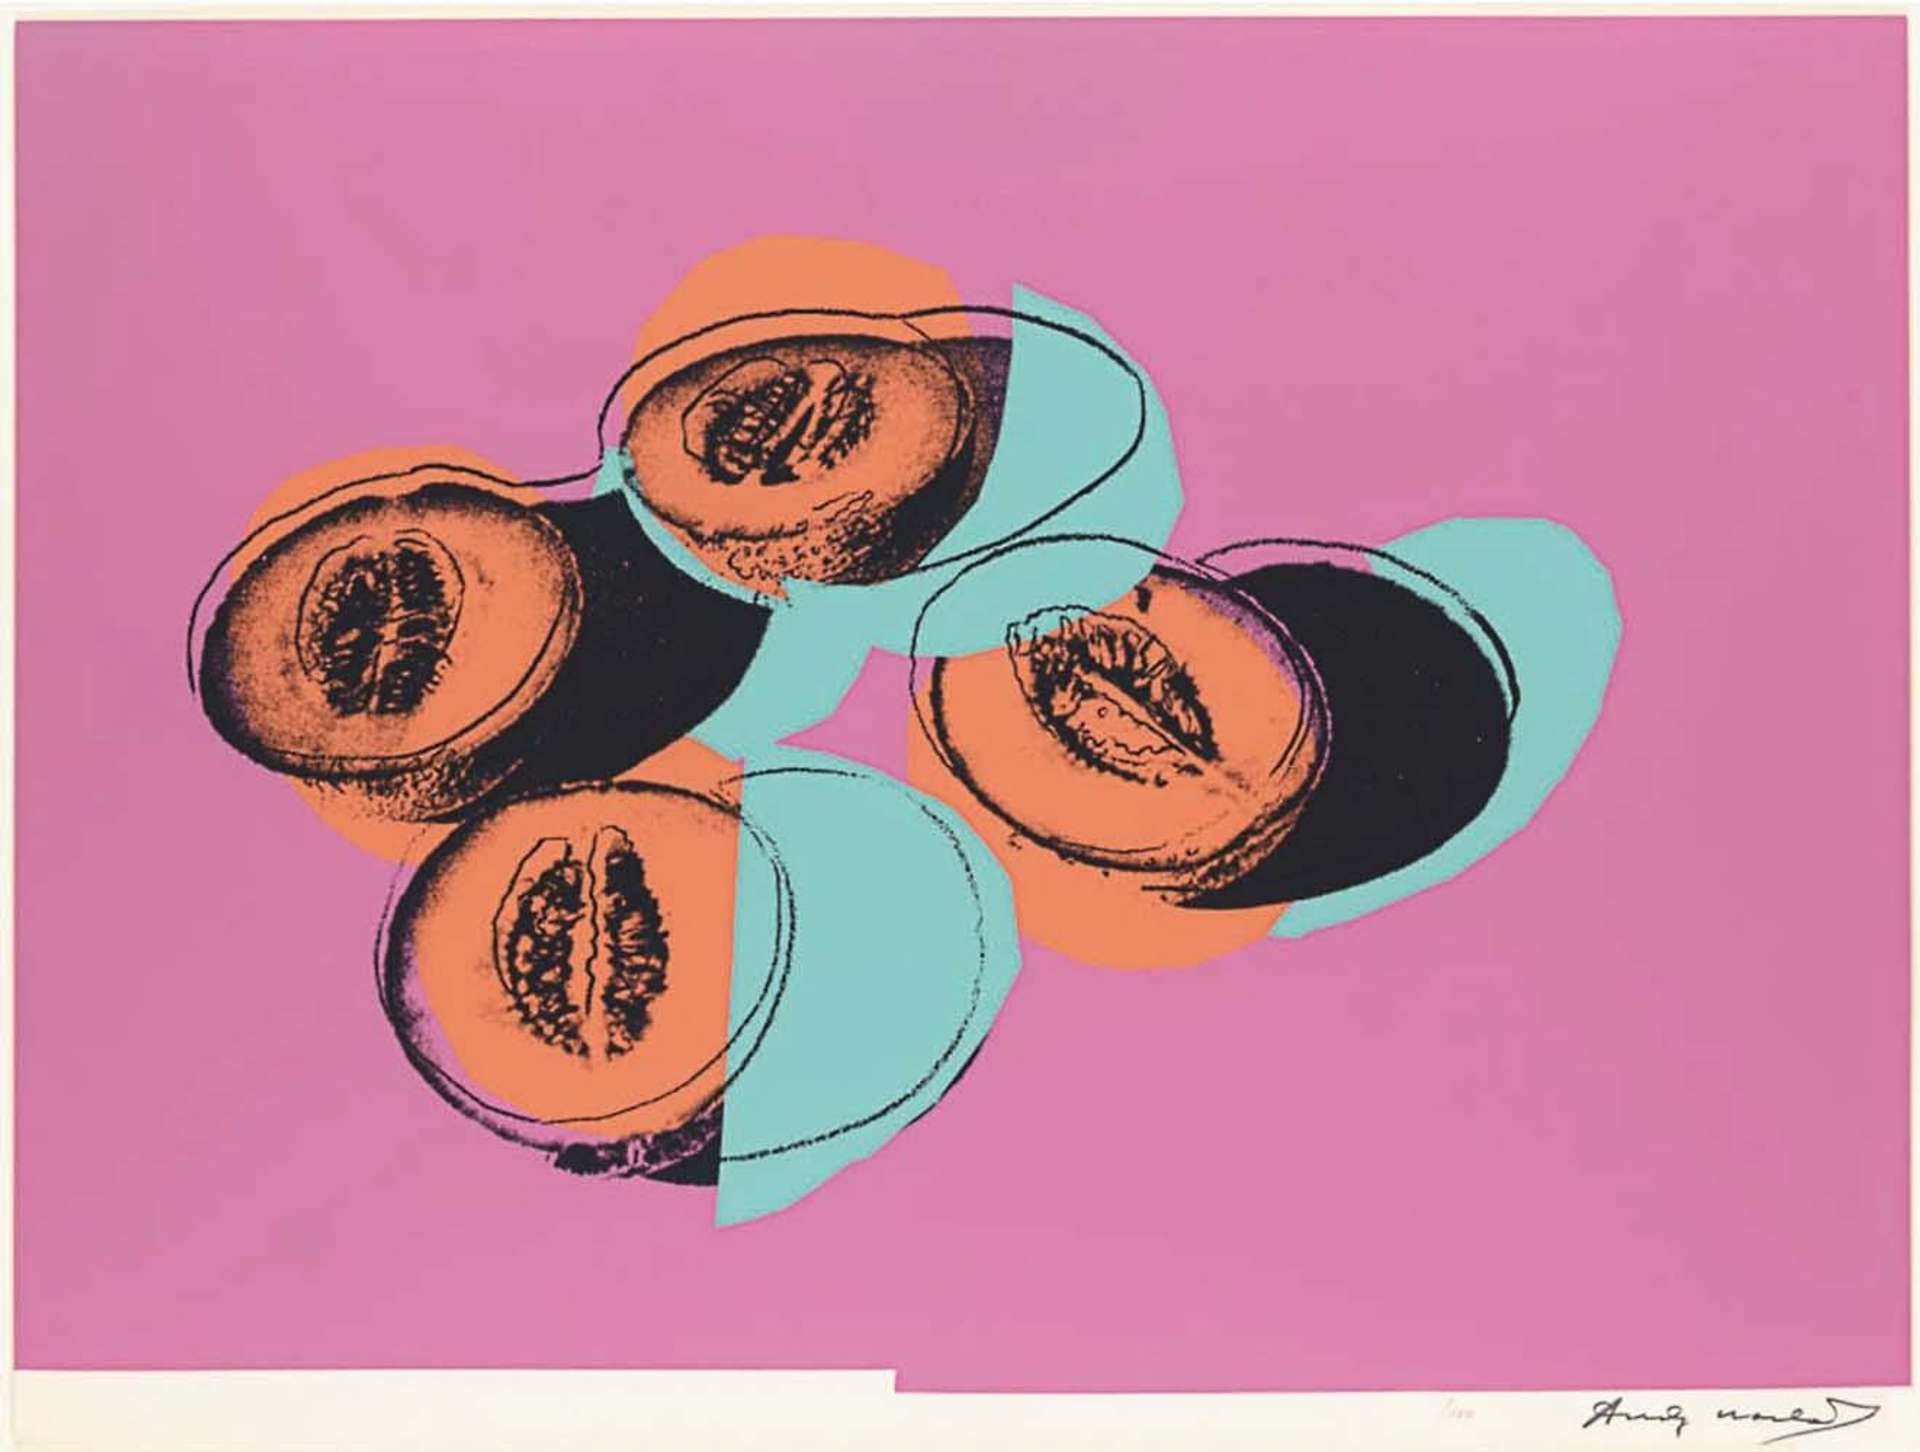 Cantaloupes II (F. & S. II.198) by Andy Warhol